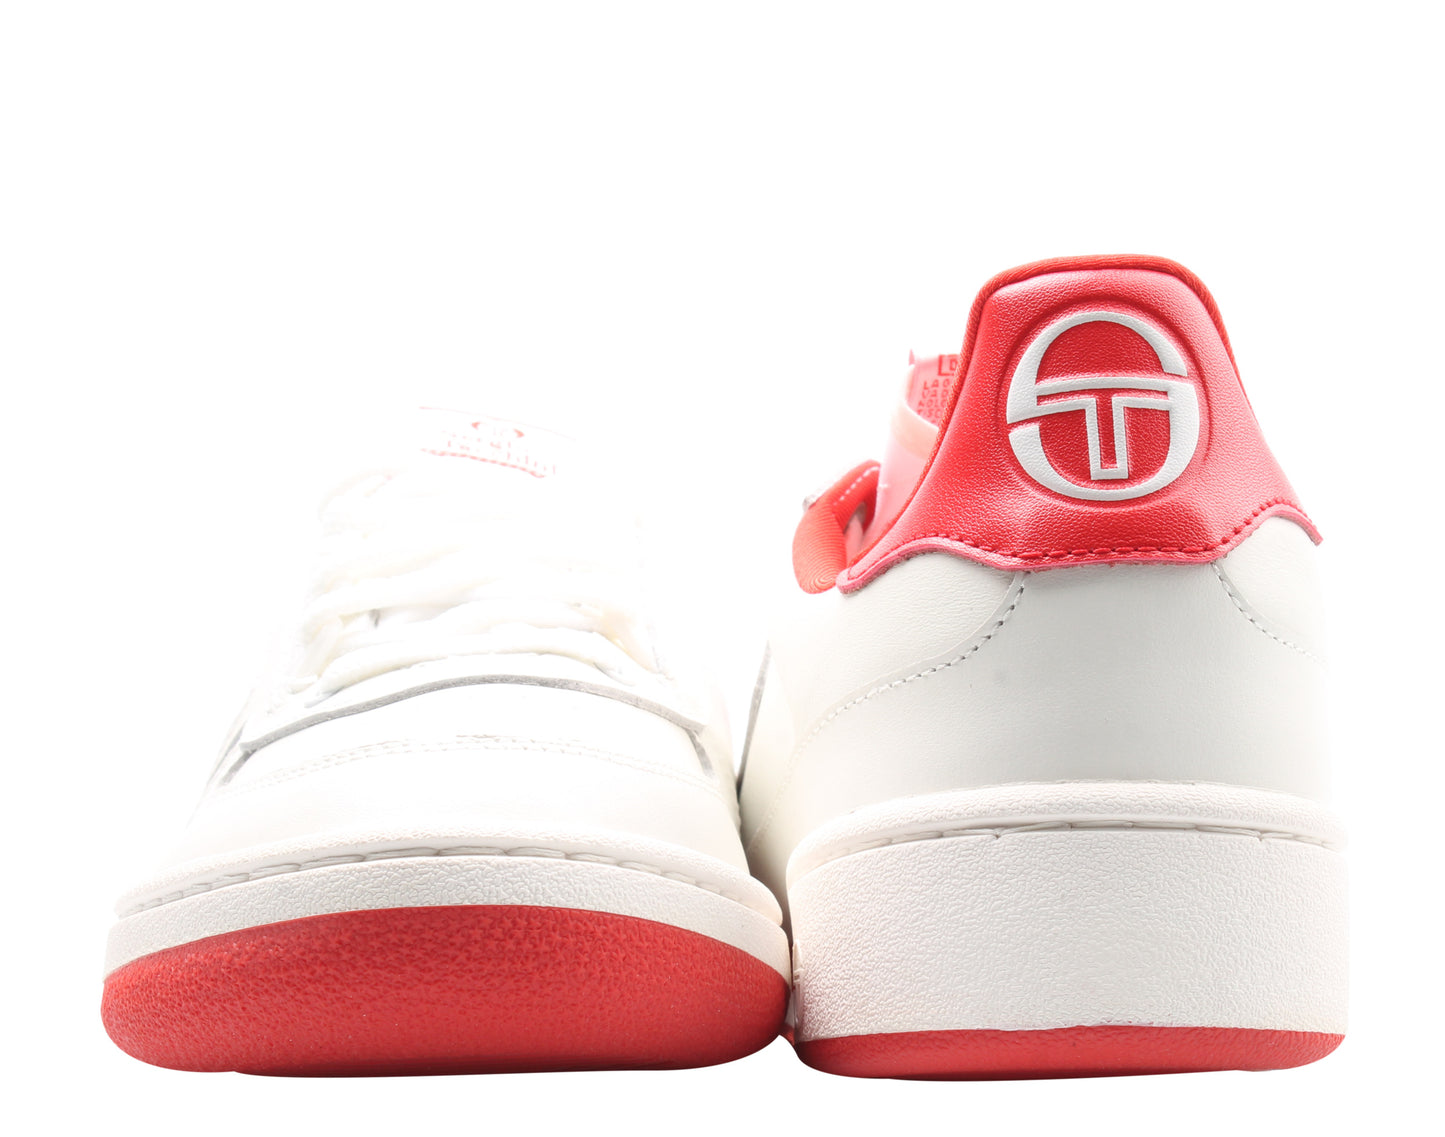 Sergio Tacchini New Young Line Men's Tennis Sneakers